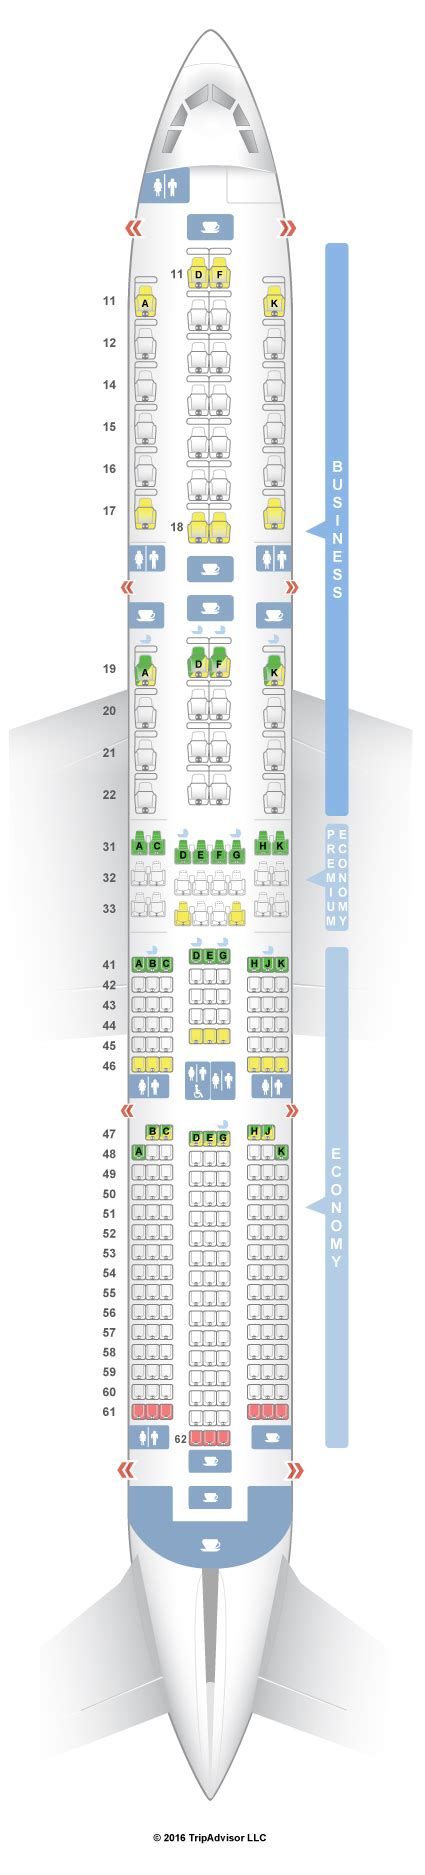 Seatguru Seat Map Singapore Airlines Airbus A